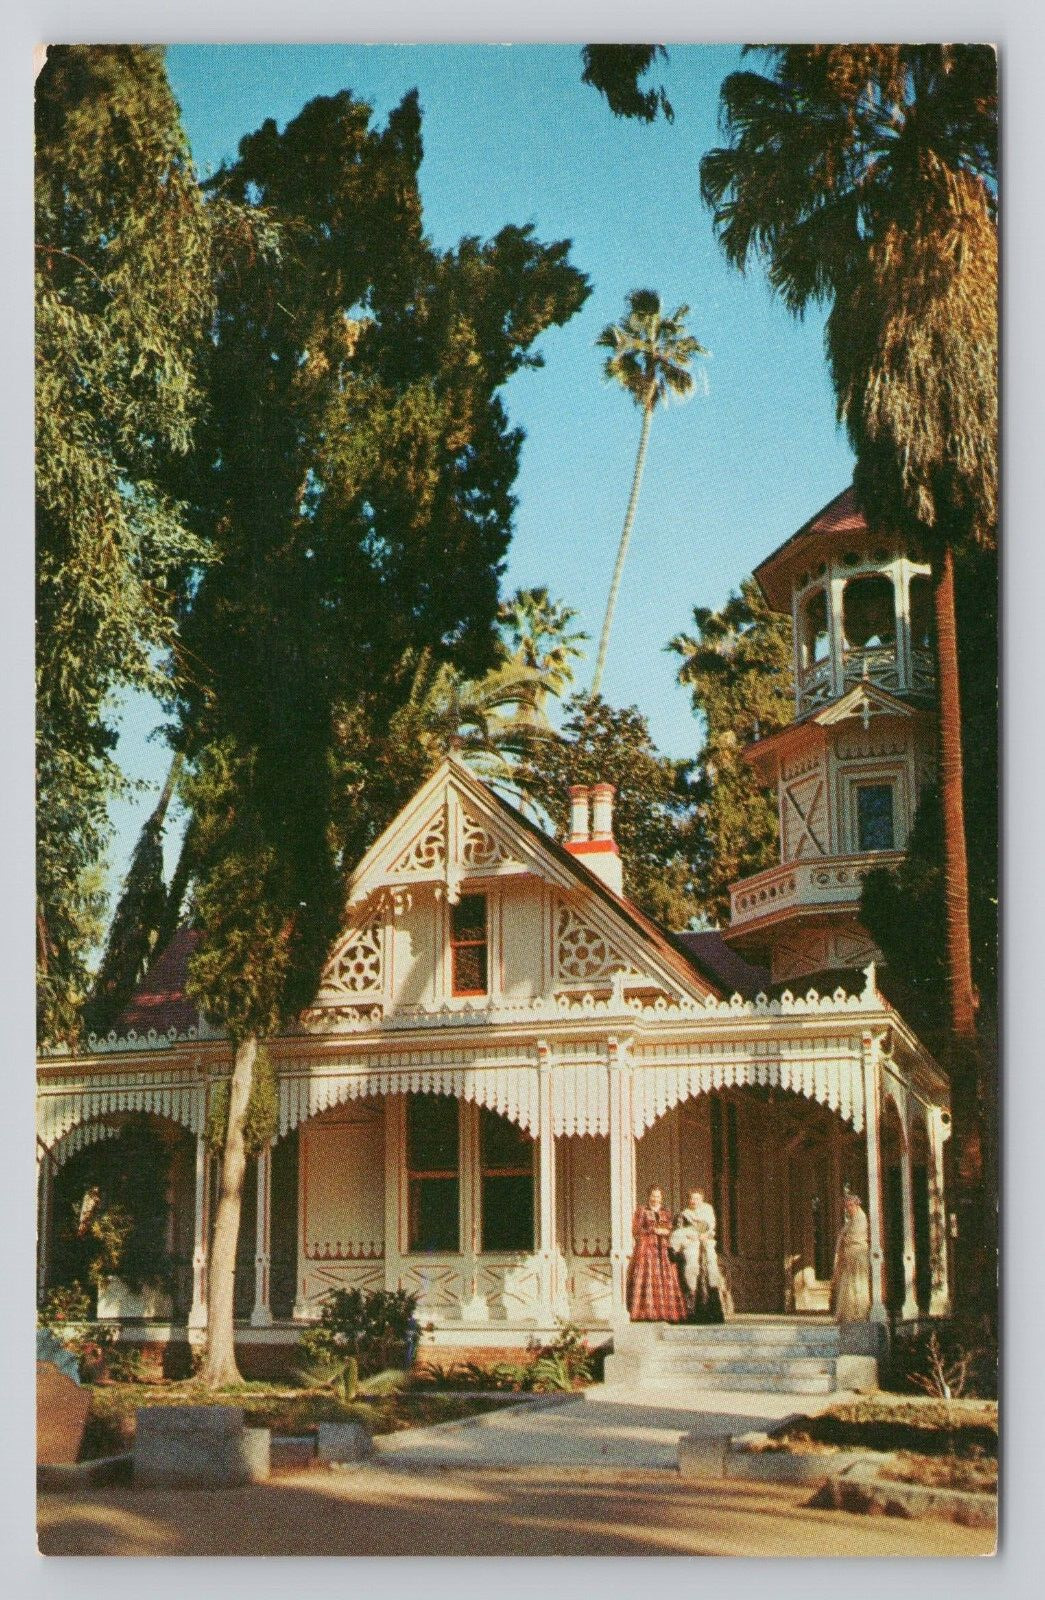 Queen Anne Cottage Los Angeles County Arboretum Arcadia, CA Postcard 3146